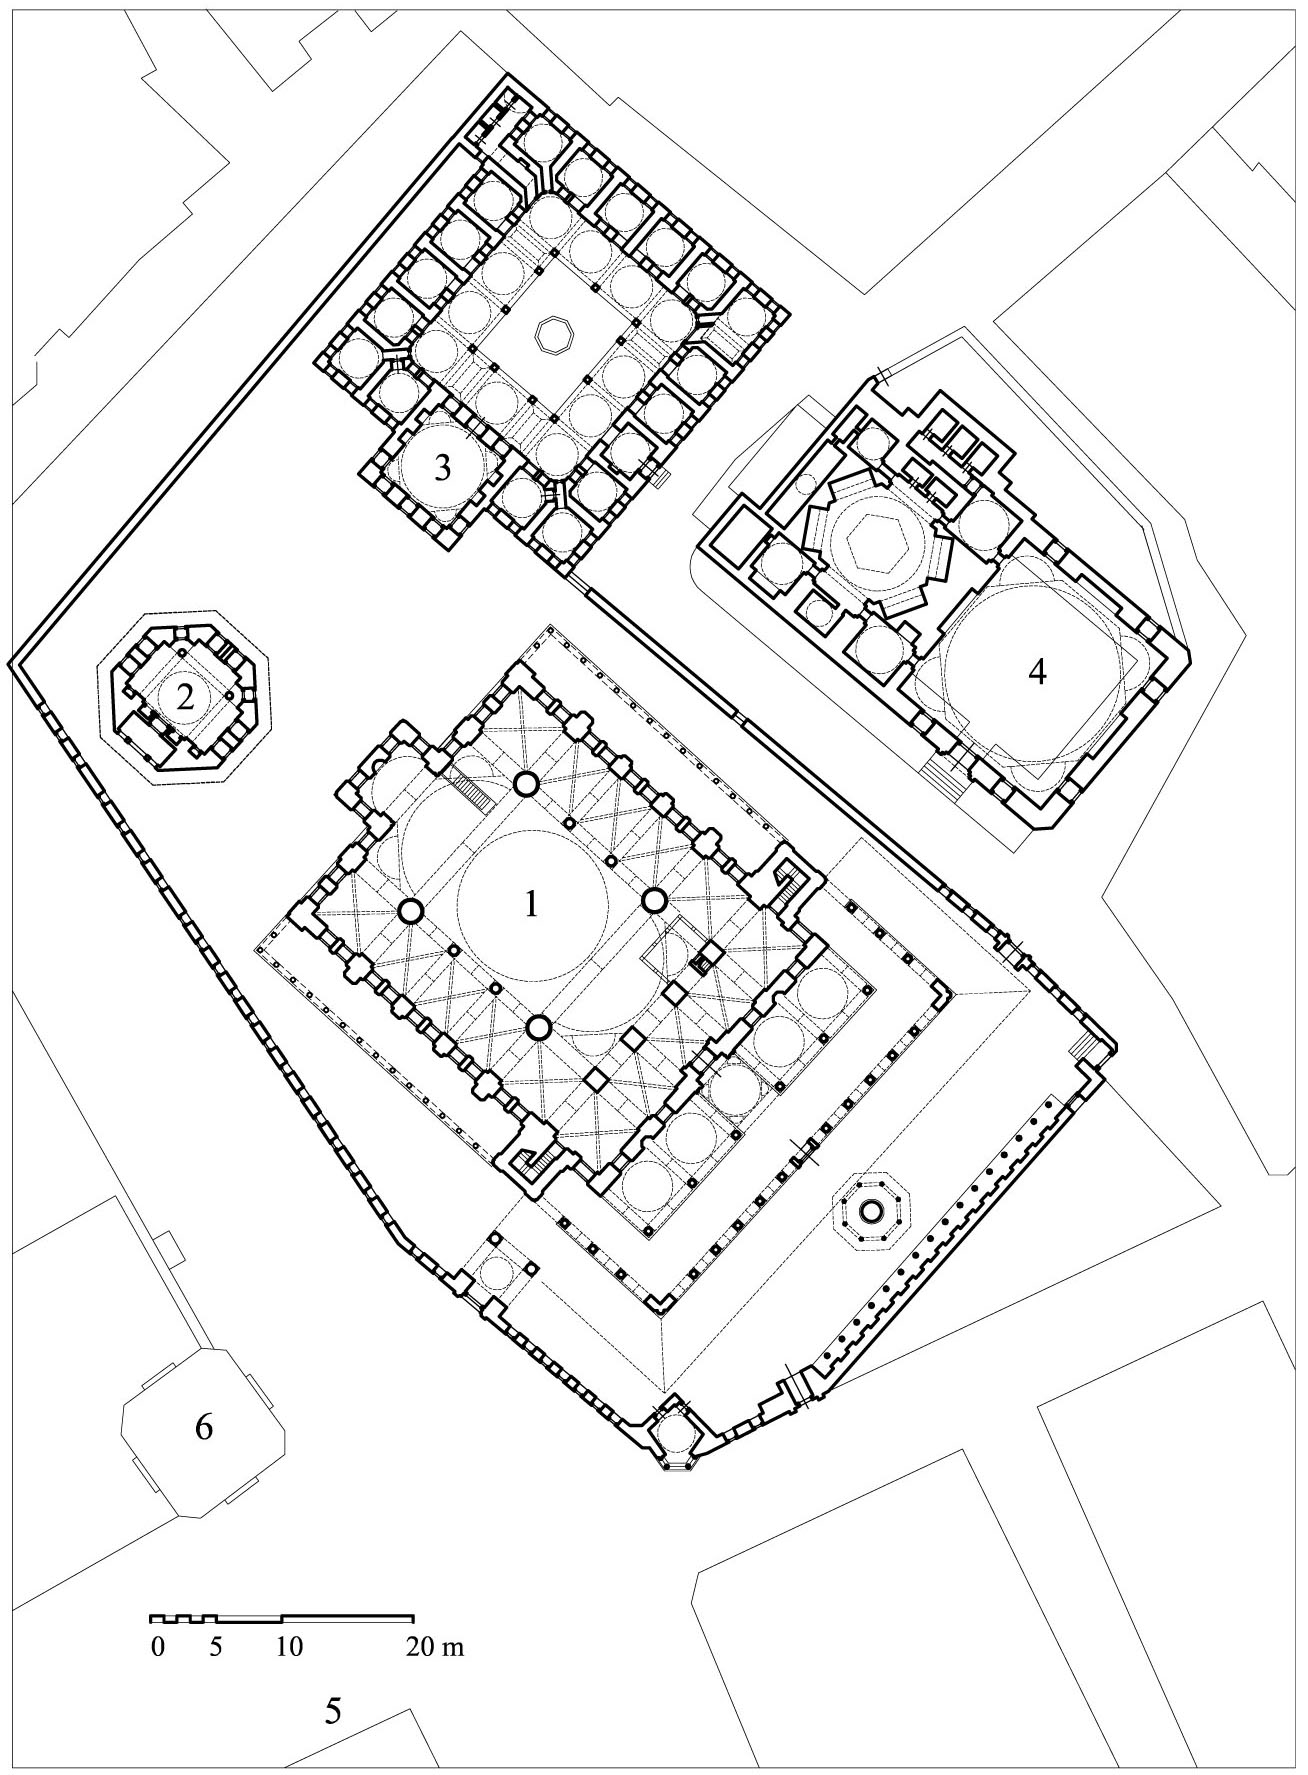 Kılıç Ali Paşa Külliyesi - Floor plan of complex showing (1) mosque, (2) mausoleum, (3) madrasa, (4) bathhouse, (5) cannon foundry, (6) public fountain (1732)